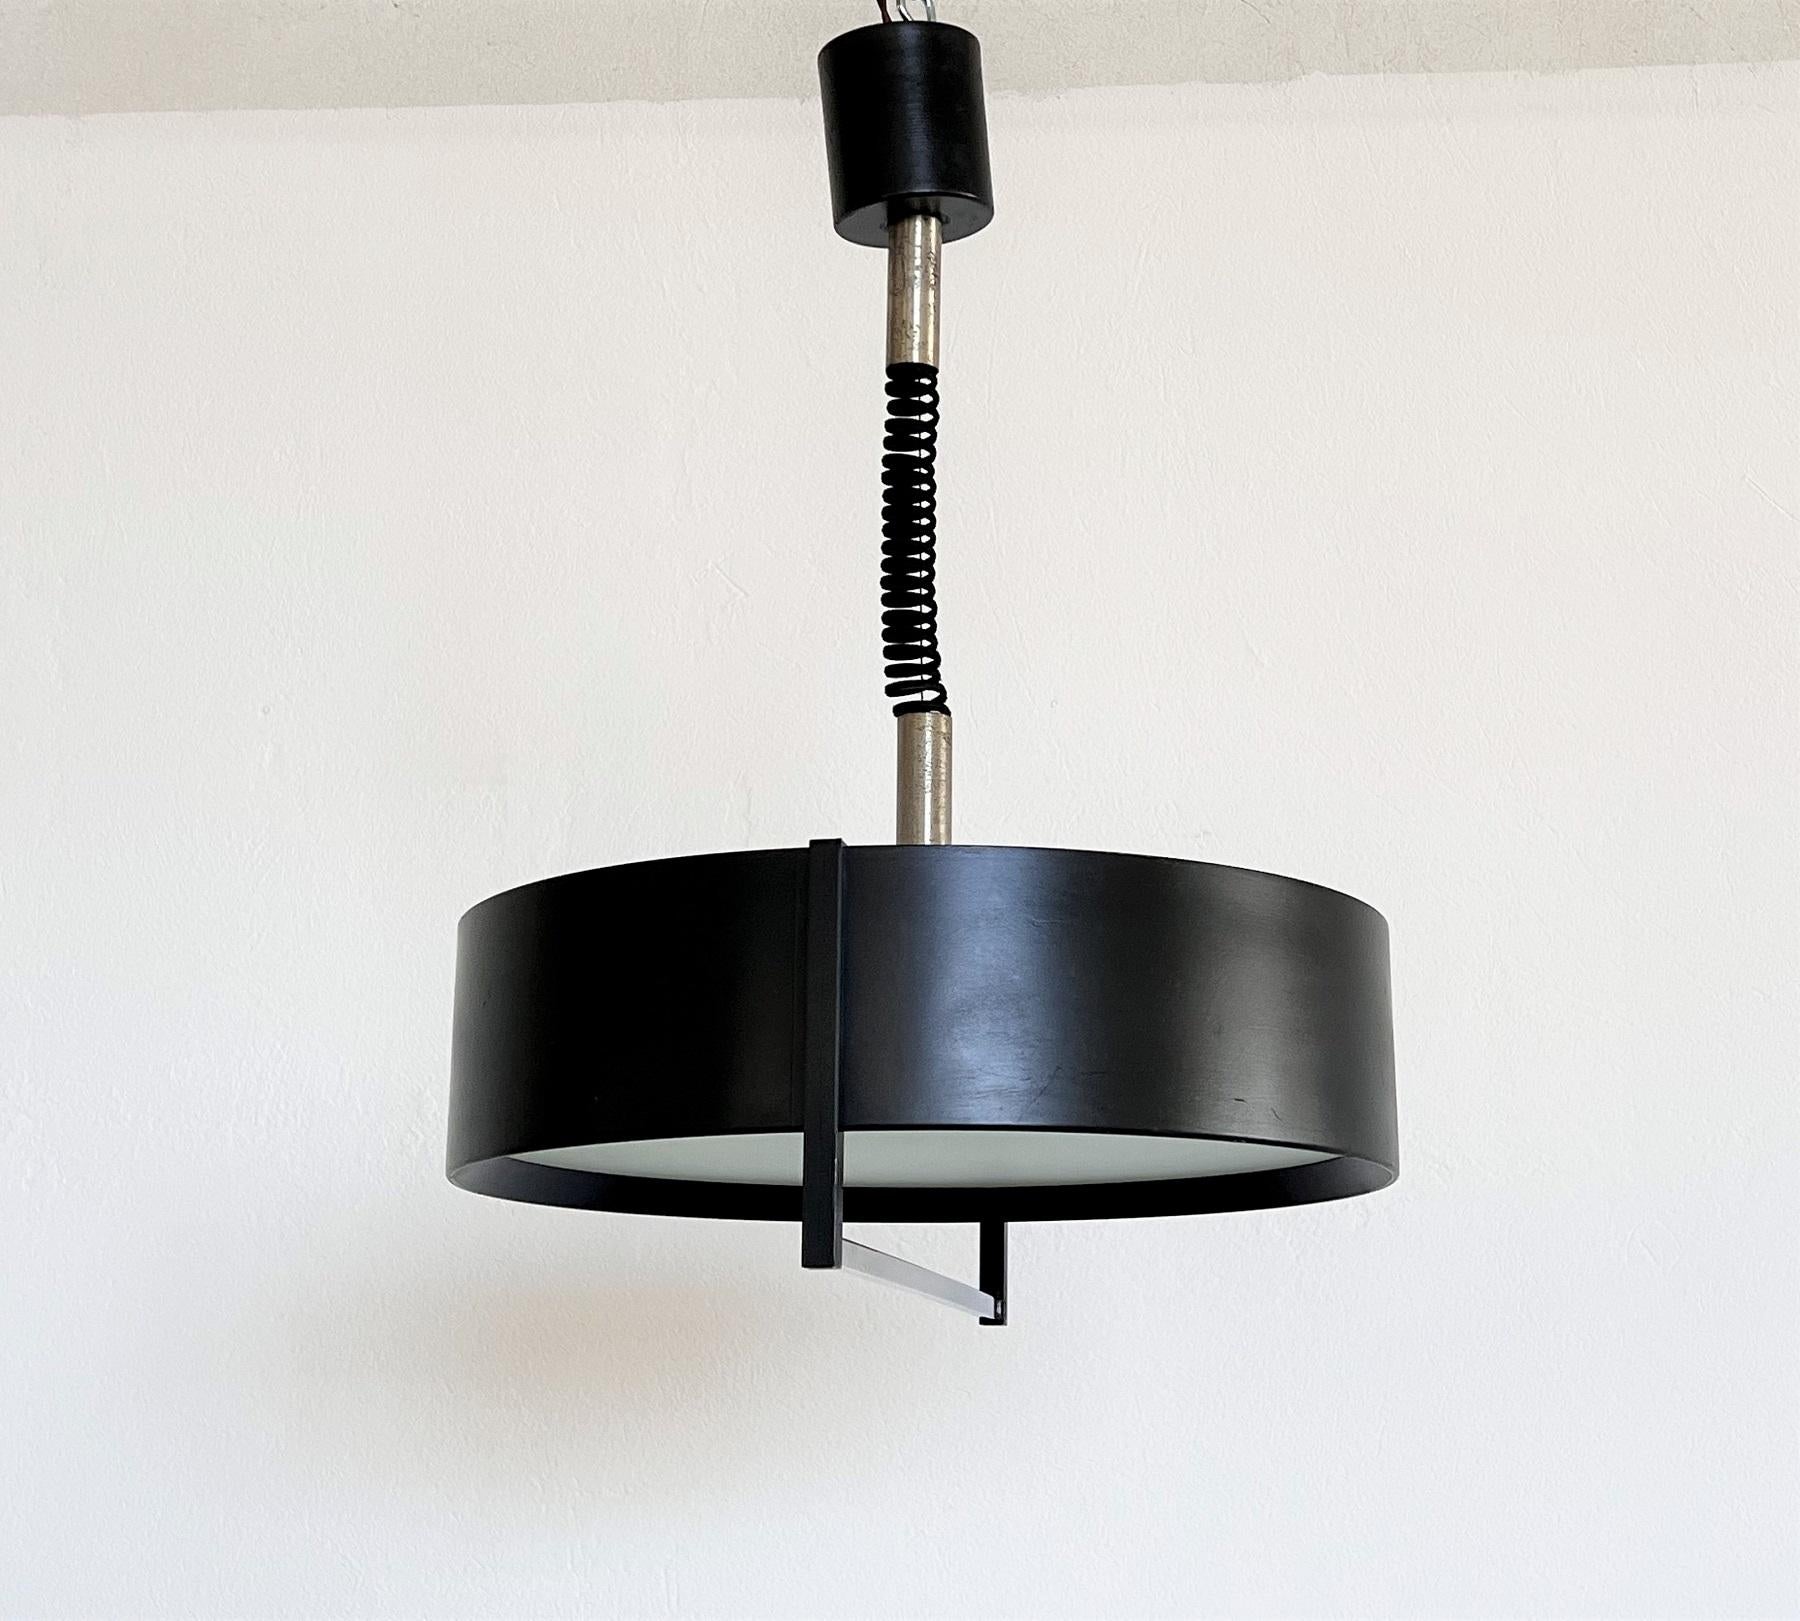 Italian Stilnovo Pendant Lamp in Metal and Glass, 1960s For Sale 7